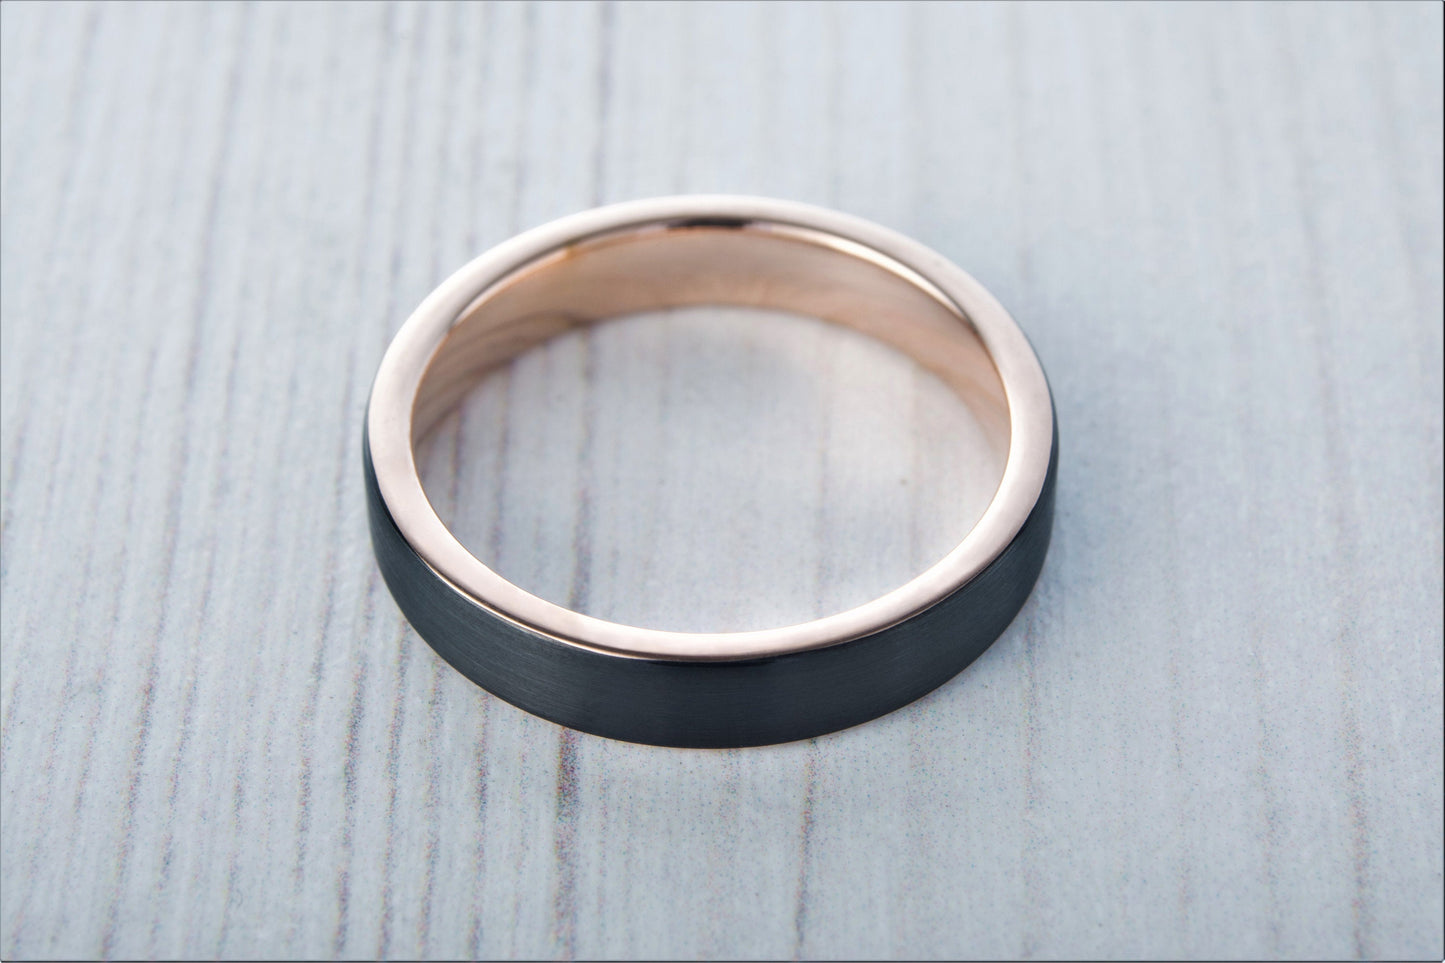 4mm Black Brushed titanium & 18k rose gold wedding ring band for men and women